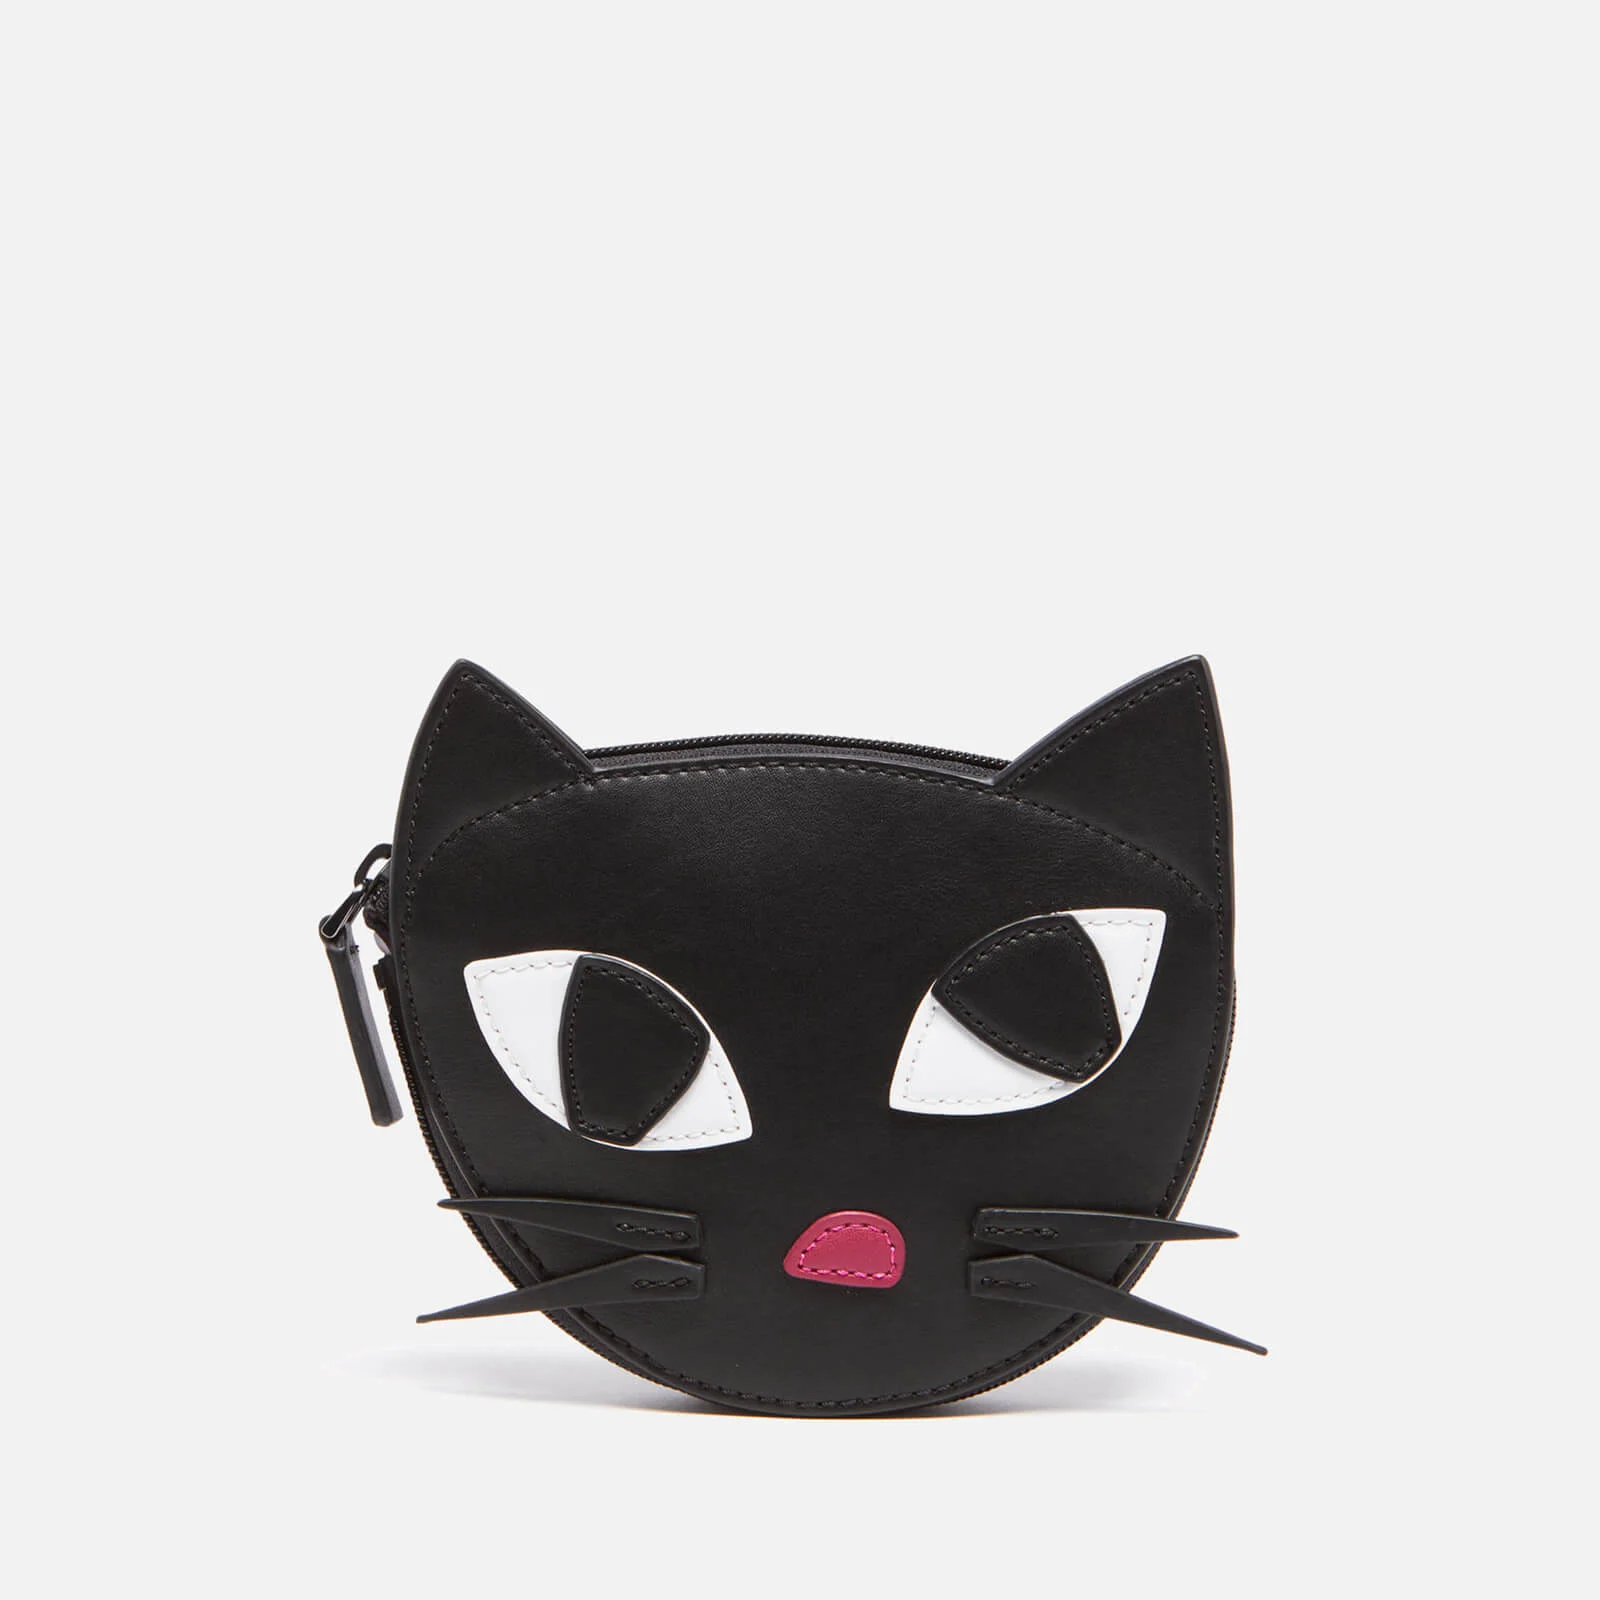 Lulu Guinness Women's Kooky Cat Foldaway Shopper Bag - Black White Image 1